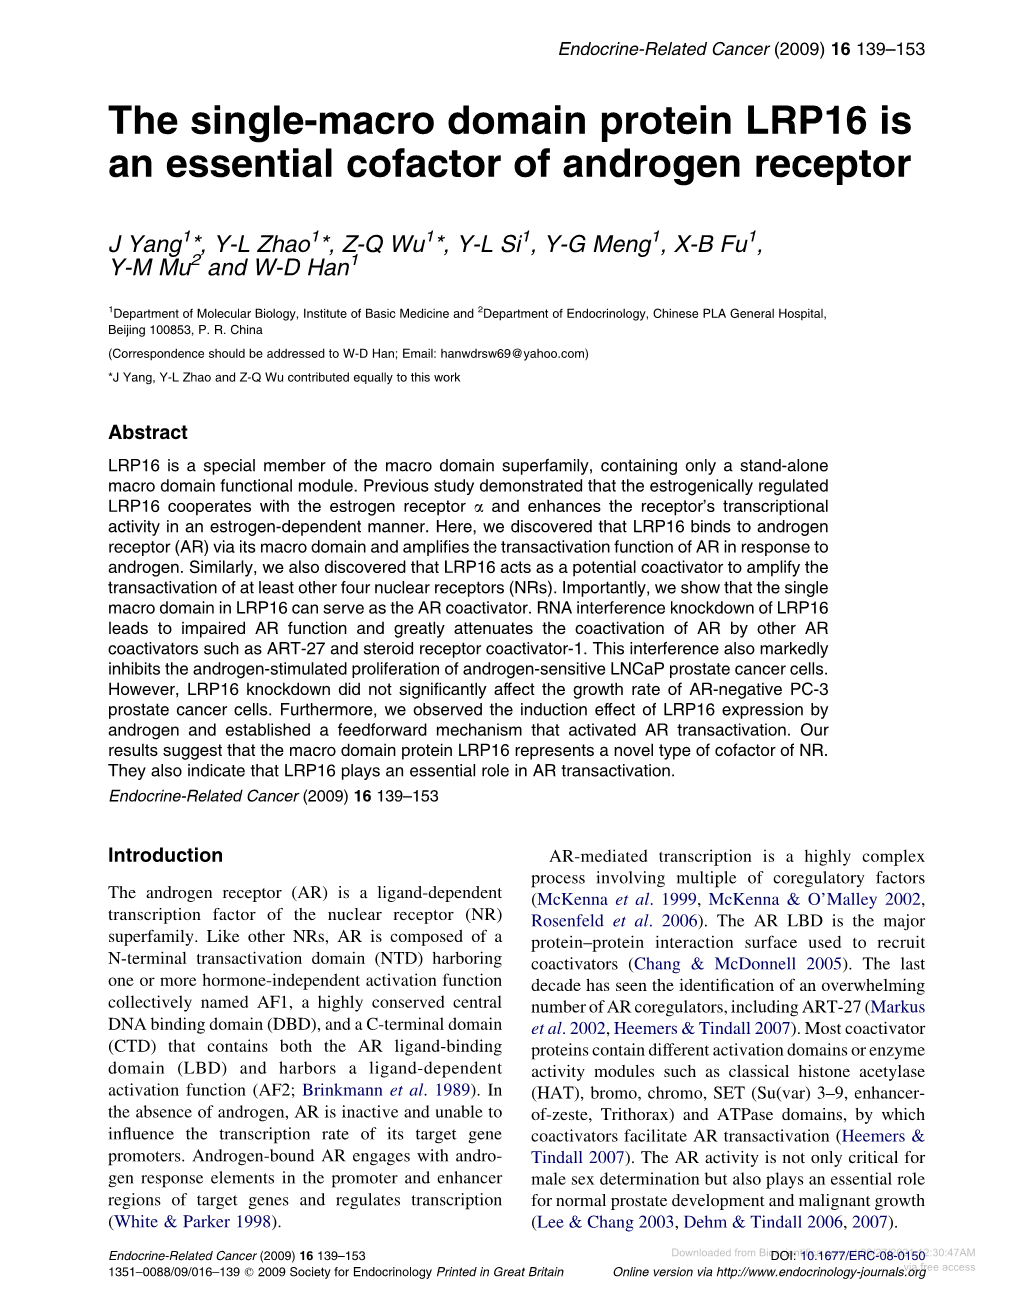 The Single-Macro Domain Protein LRP16 Is an Essential Cofactor of Androgen Receptor